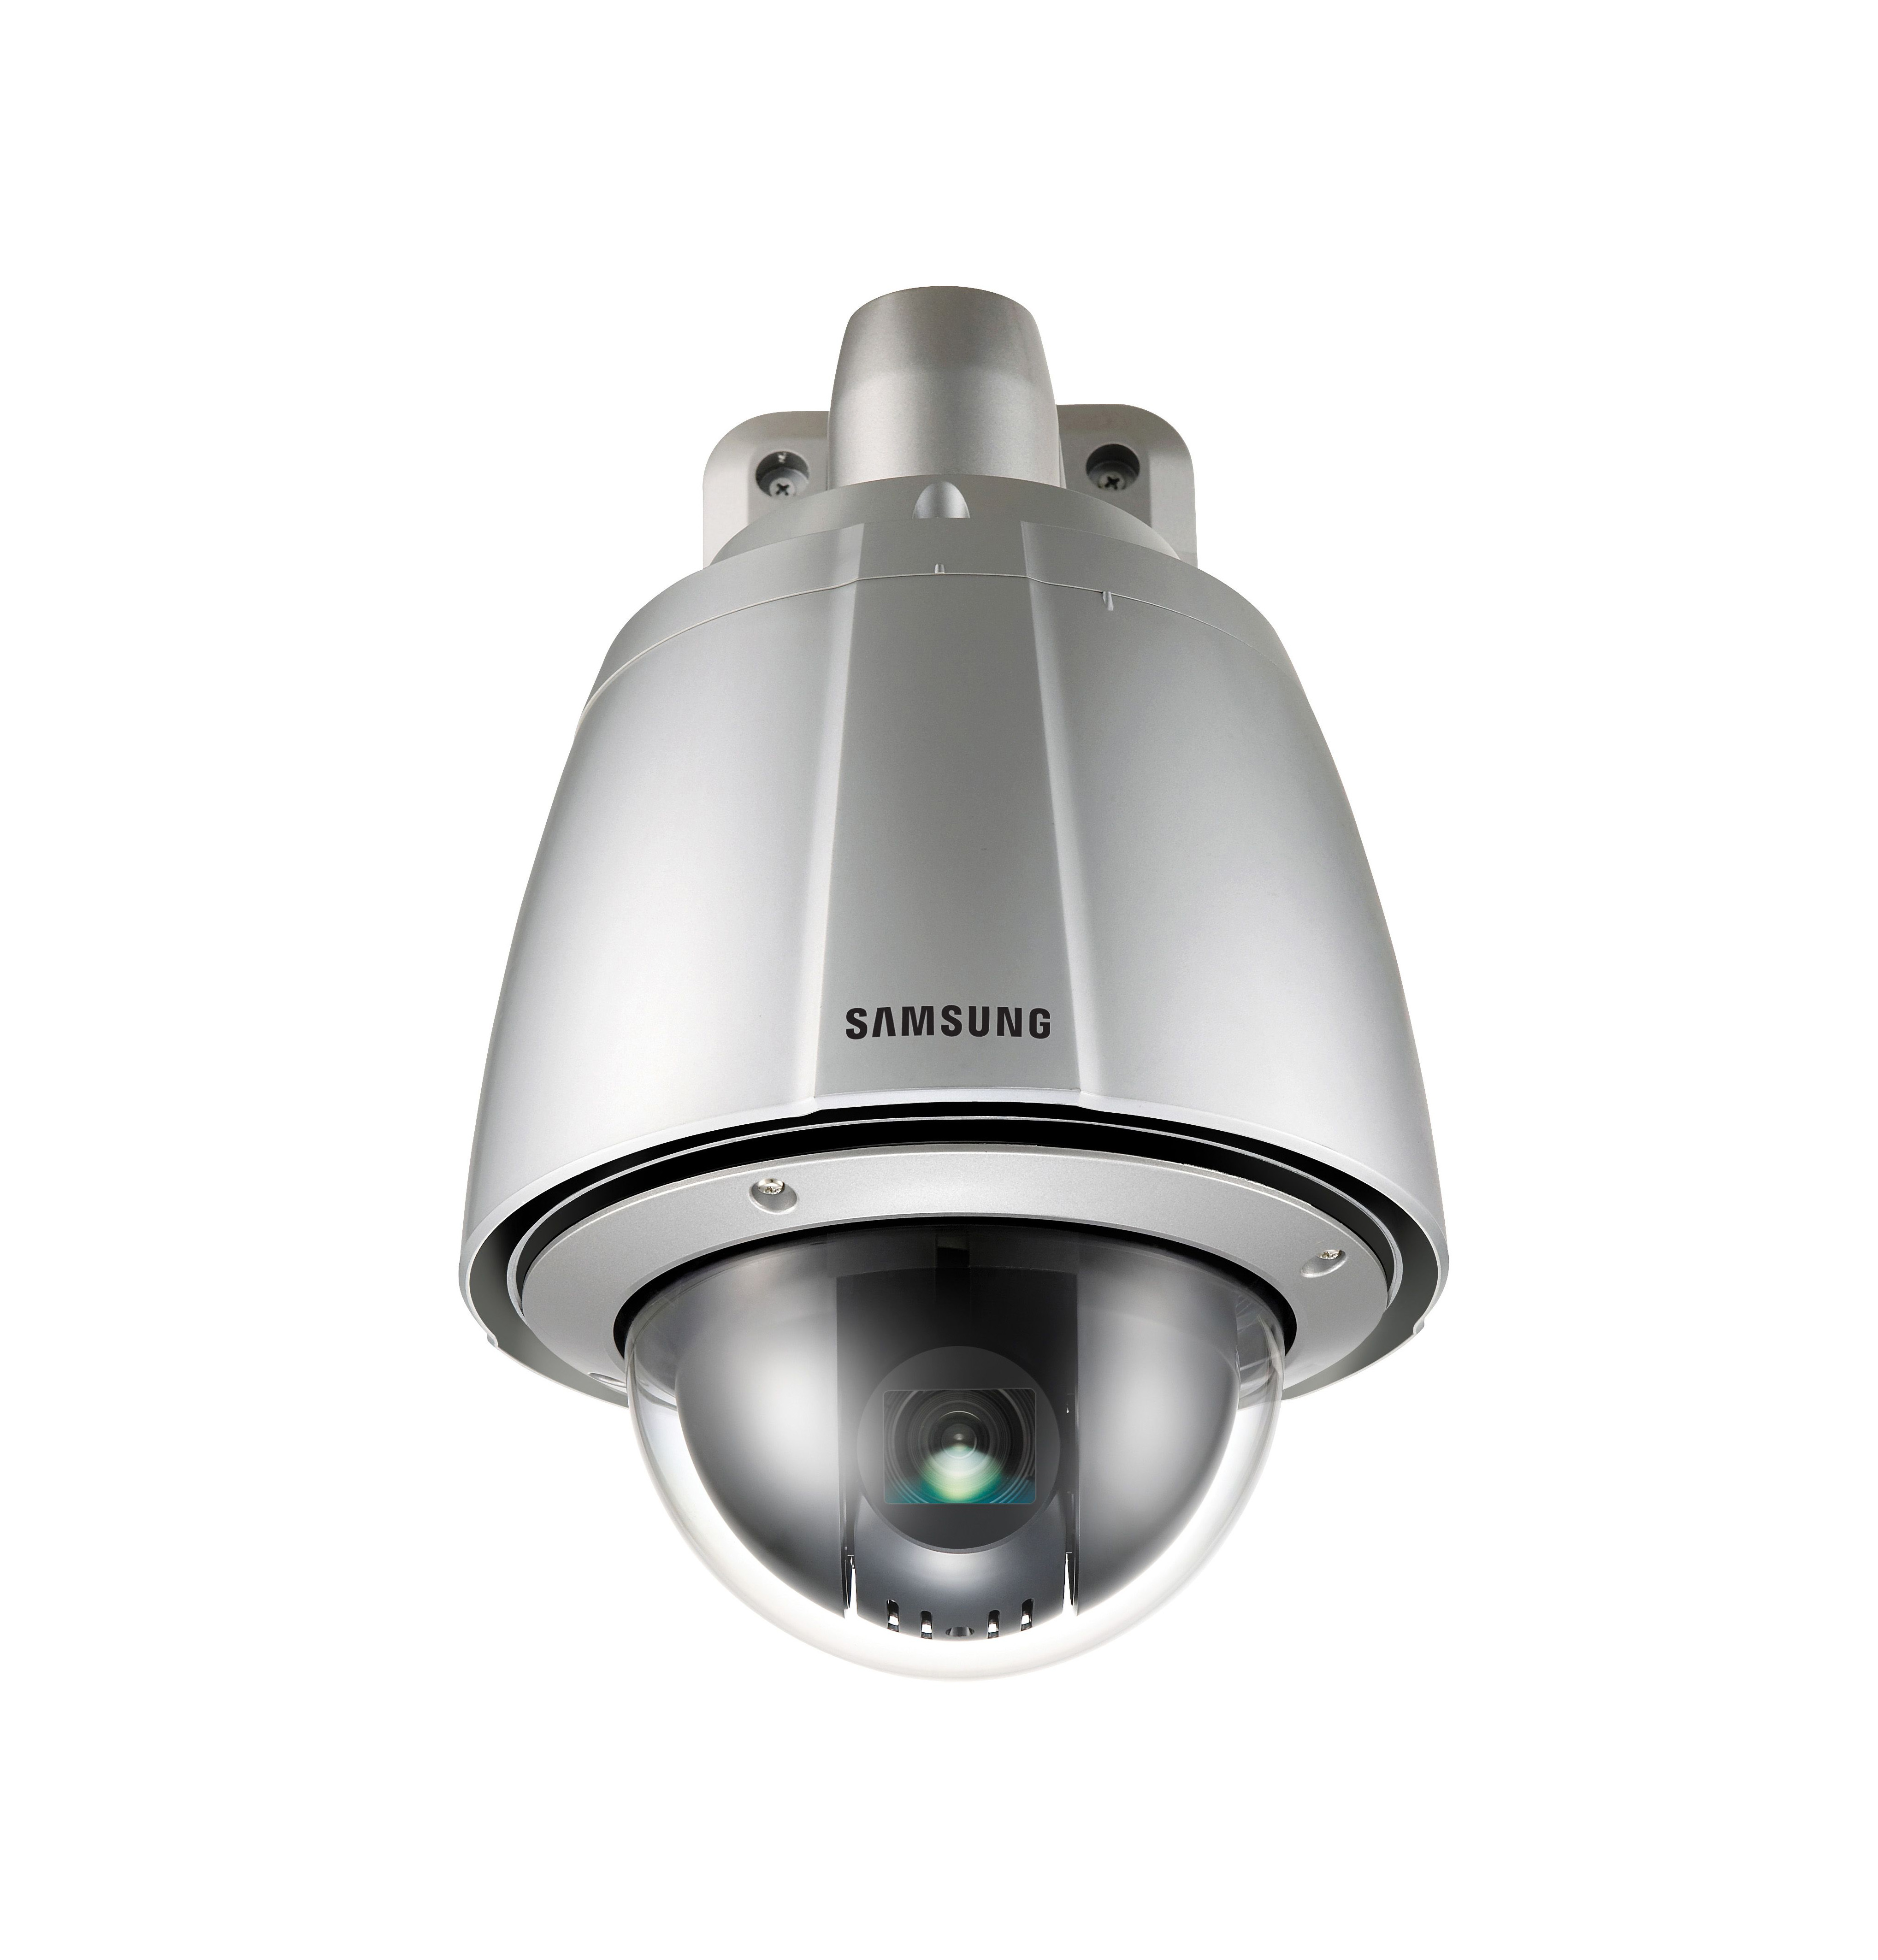 Samsung SNP-3370TH - 4CIF PTZ dan/noć mrežna kamera sa ICR filterom, 1/4'' Vertical Double Density Interline CCD čip, 37x optički zum (3.5 ~ 129.5mm), u antivandal kućištu, IP66 zaštita